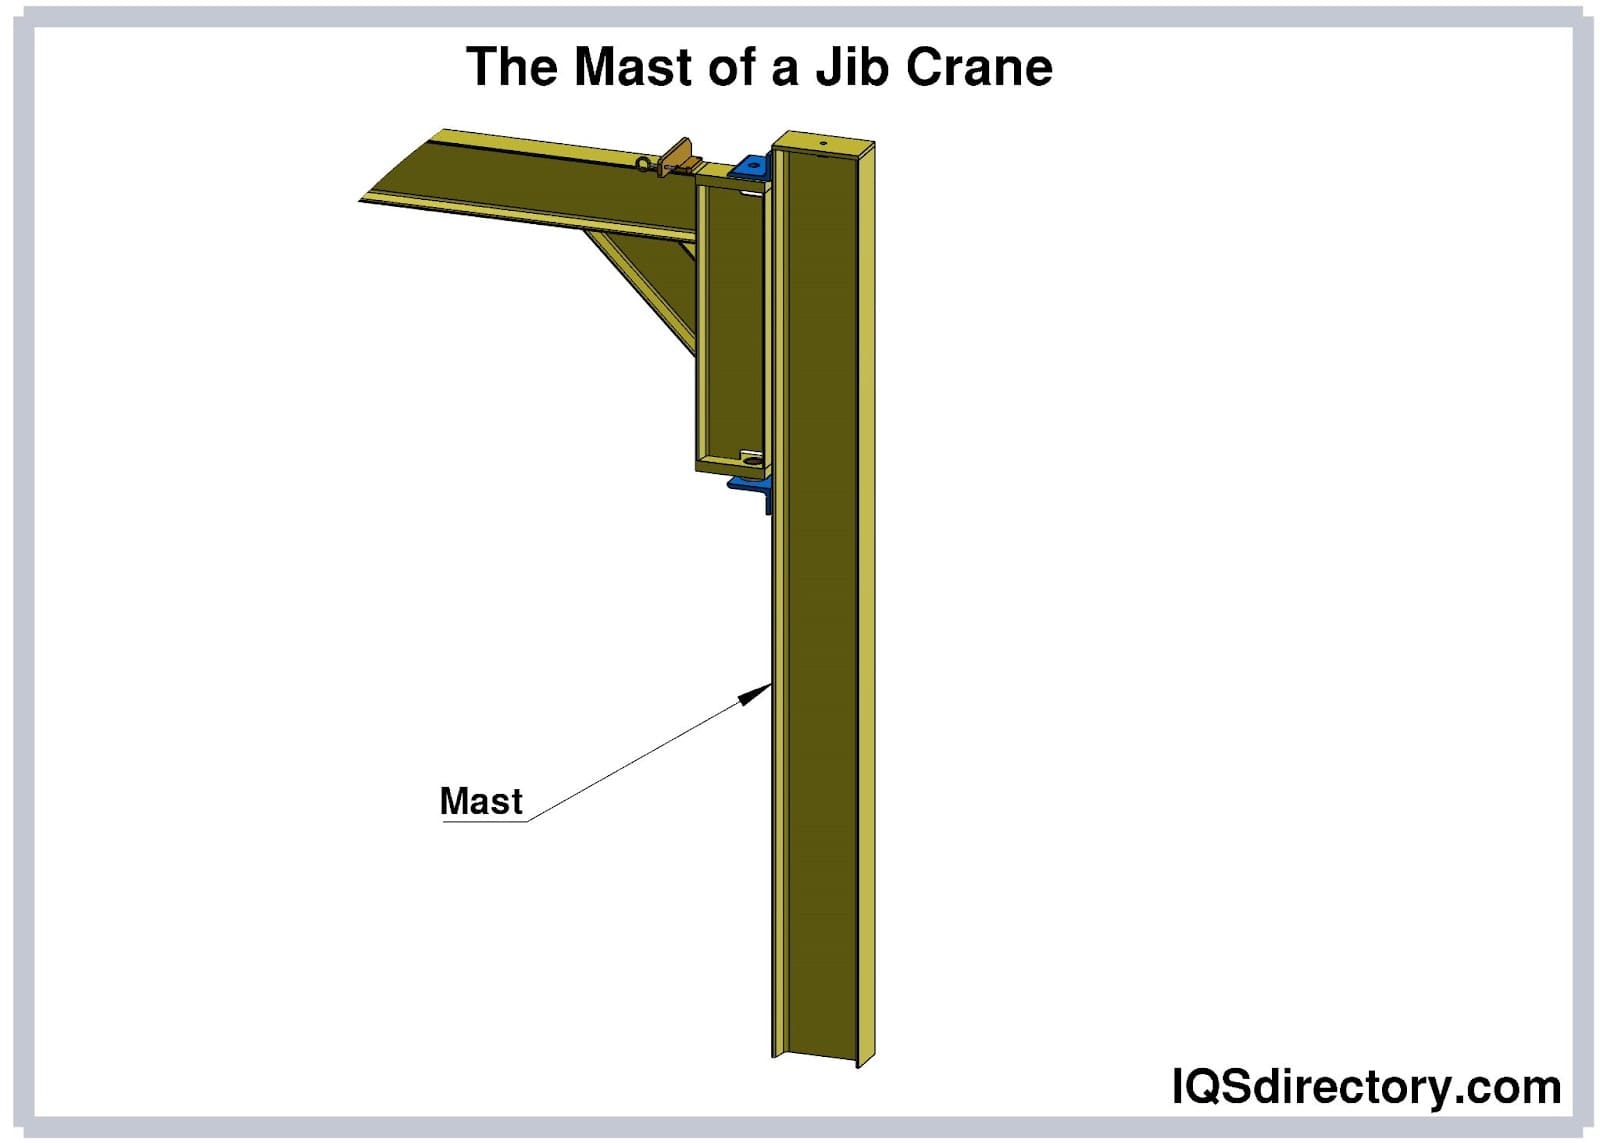 The Mast of a Jib Crane